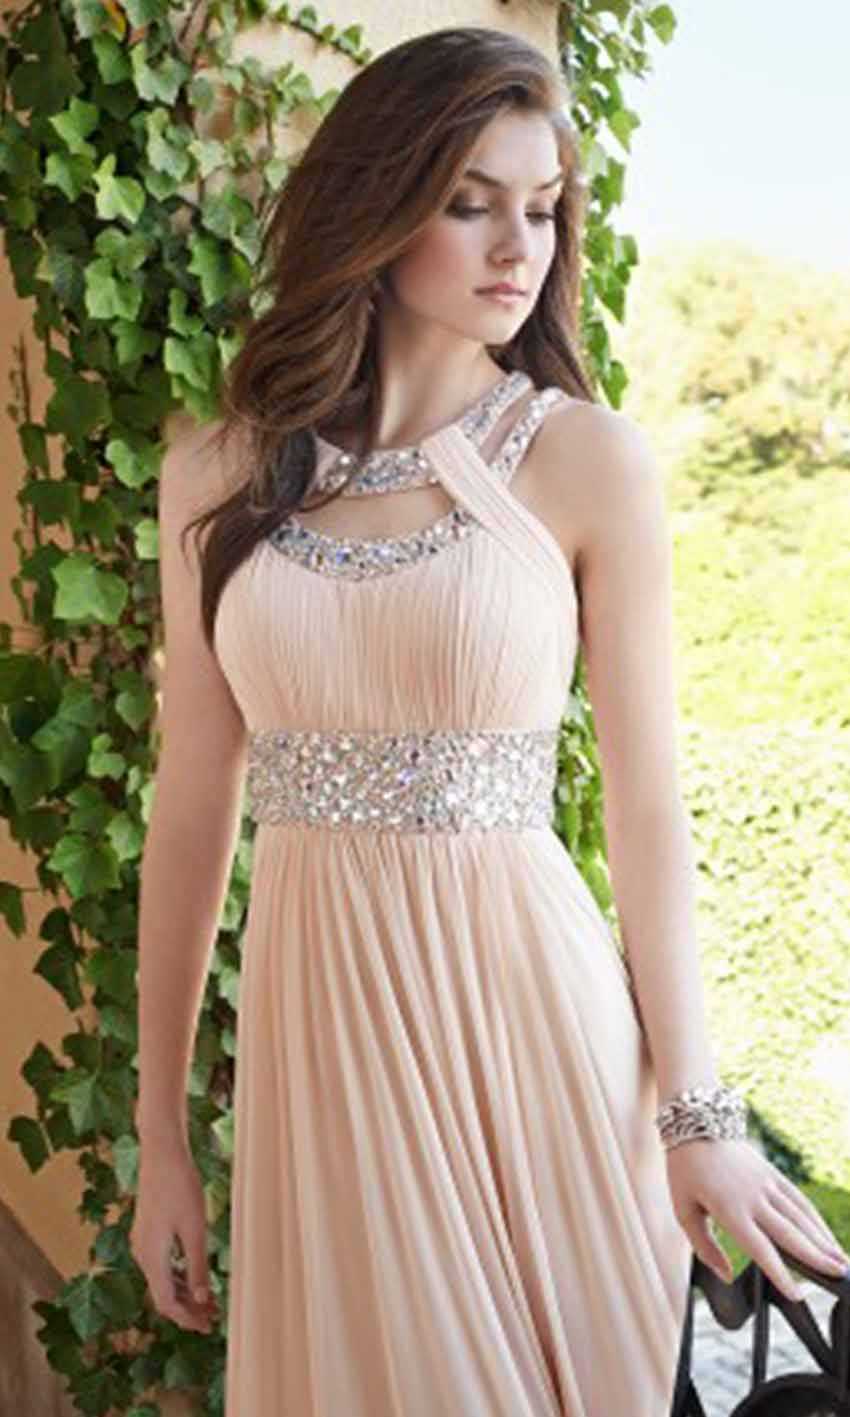 Classy prom dresses